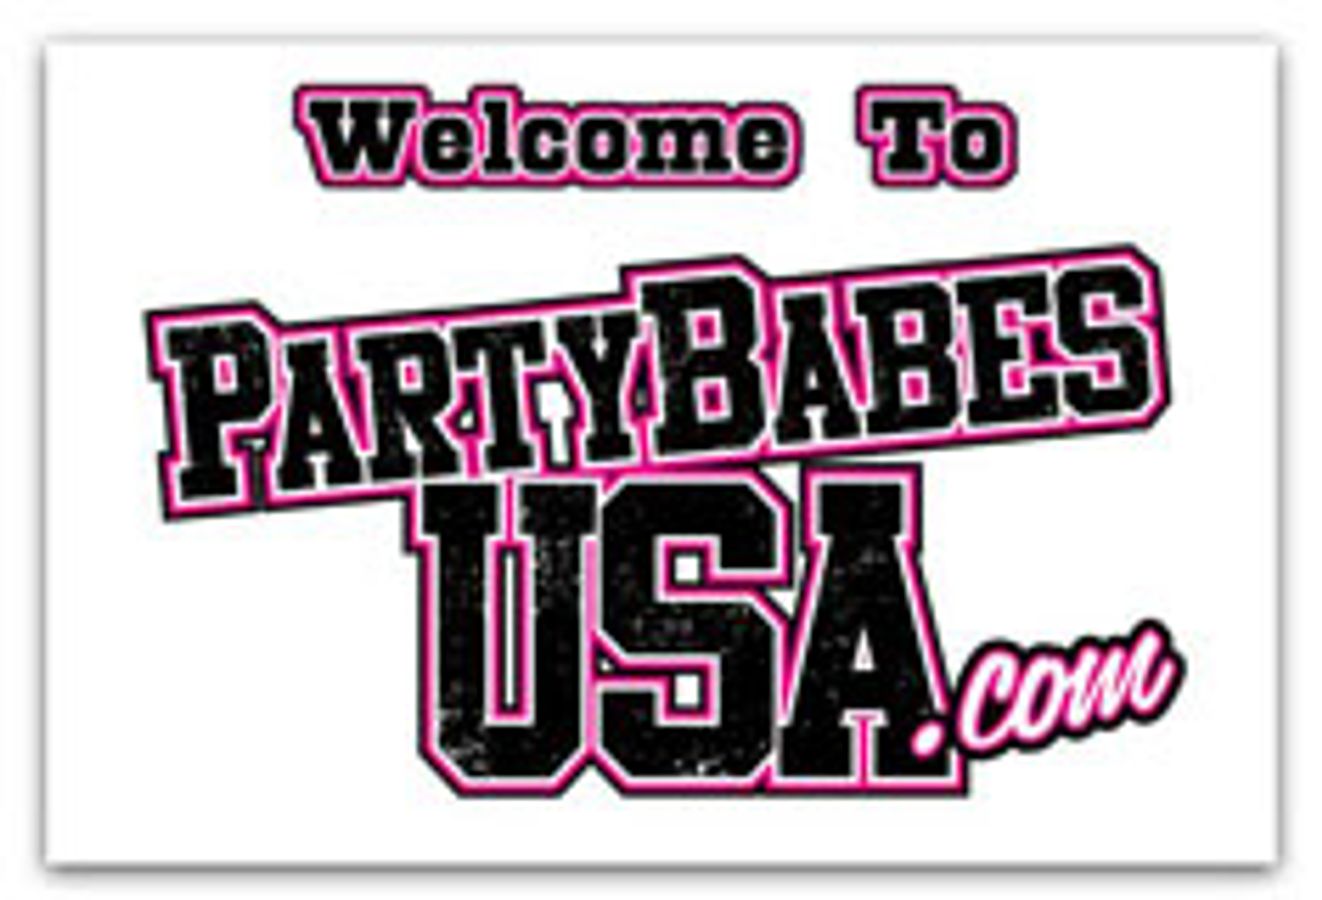 Party Babes USA